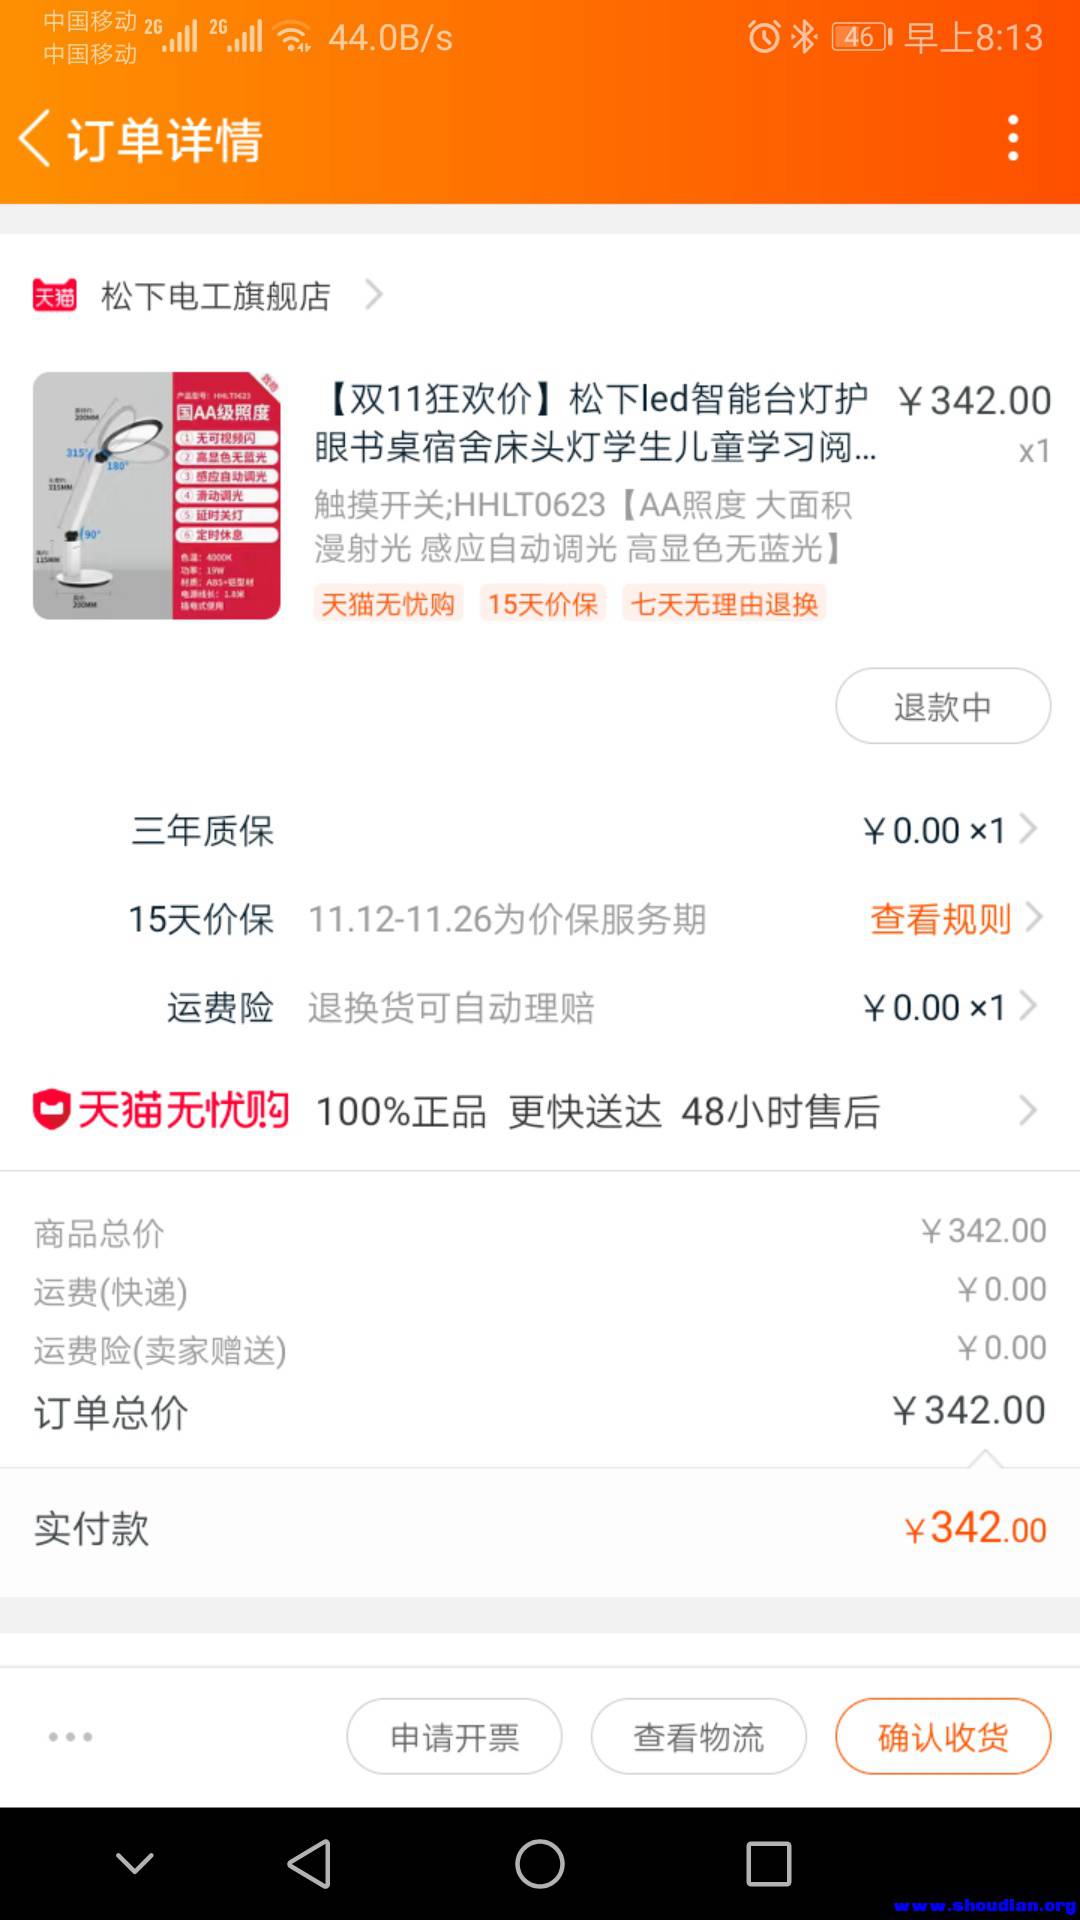 Screenshot_20191116_081358_com.taobao.taobao.jpg